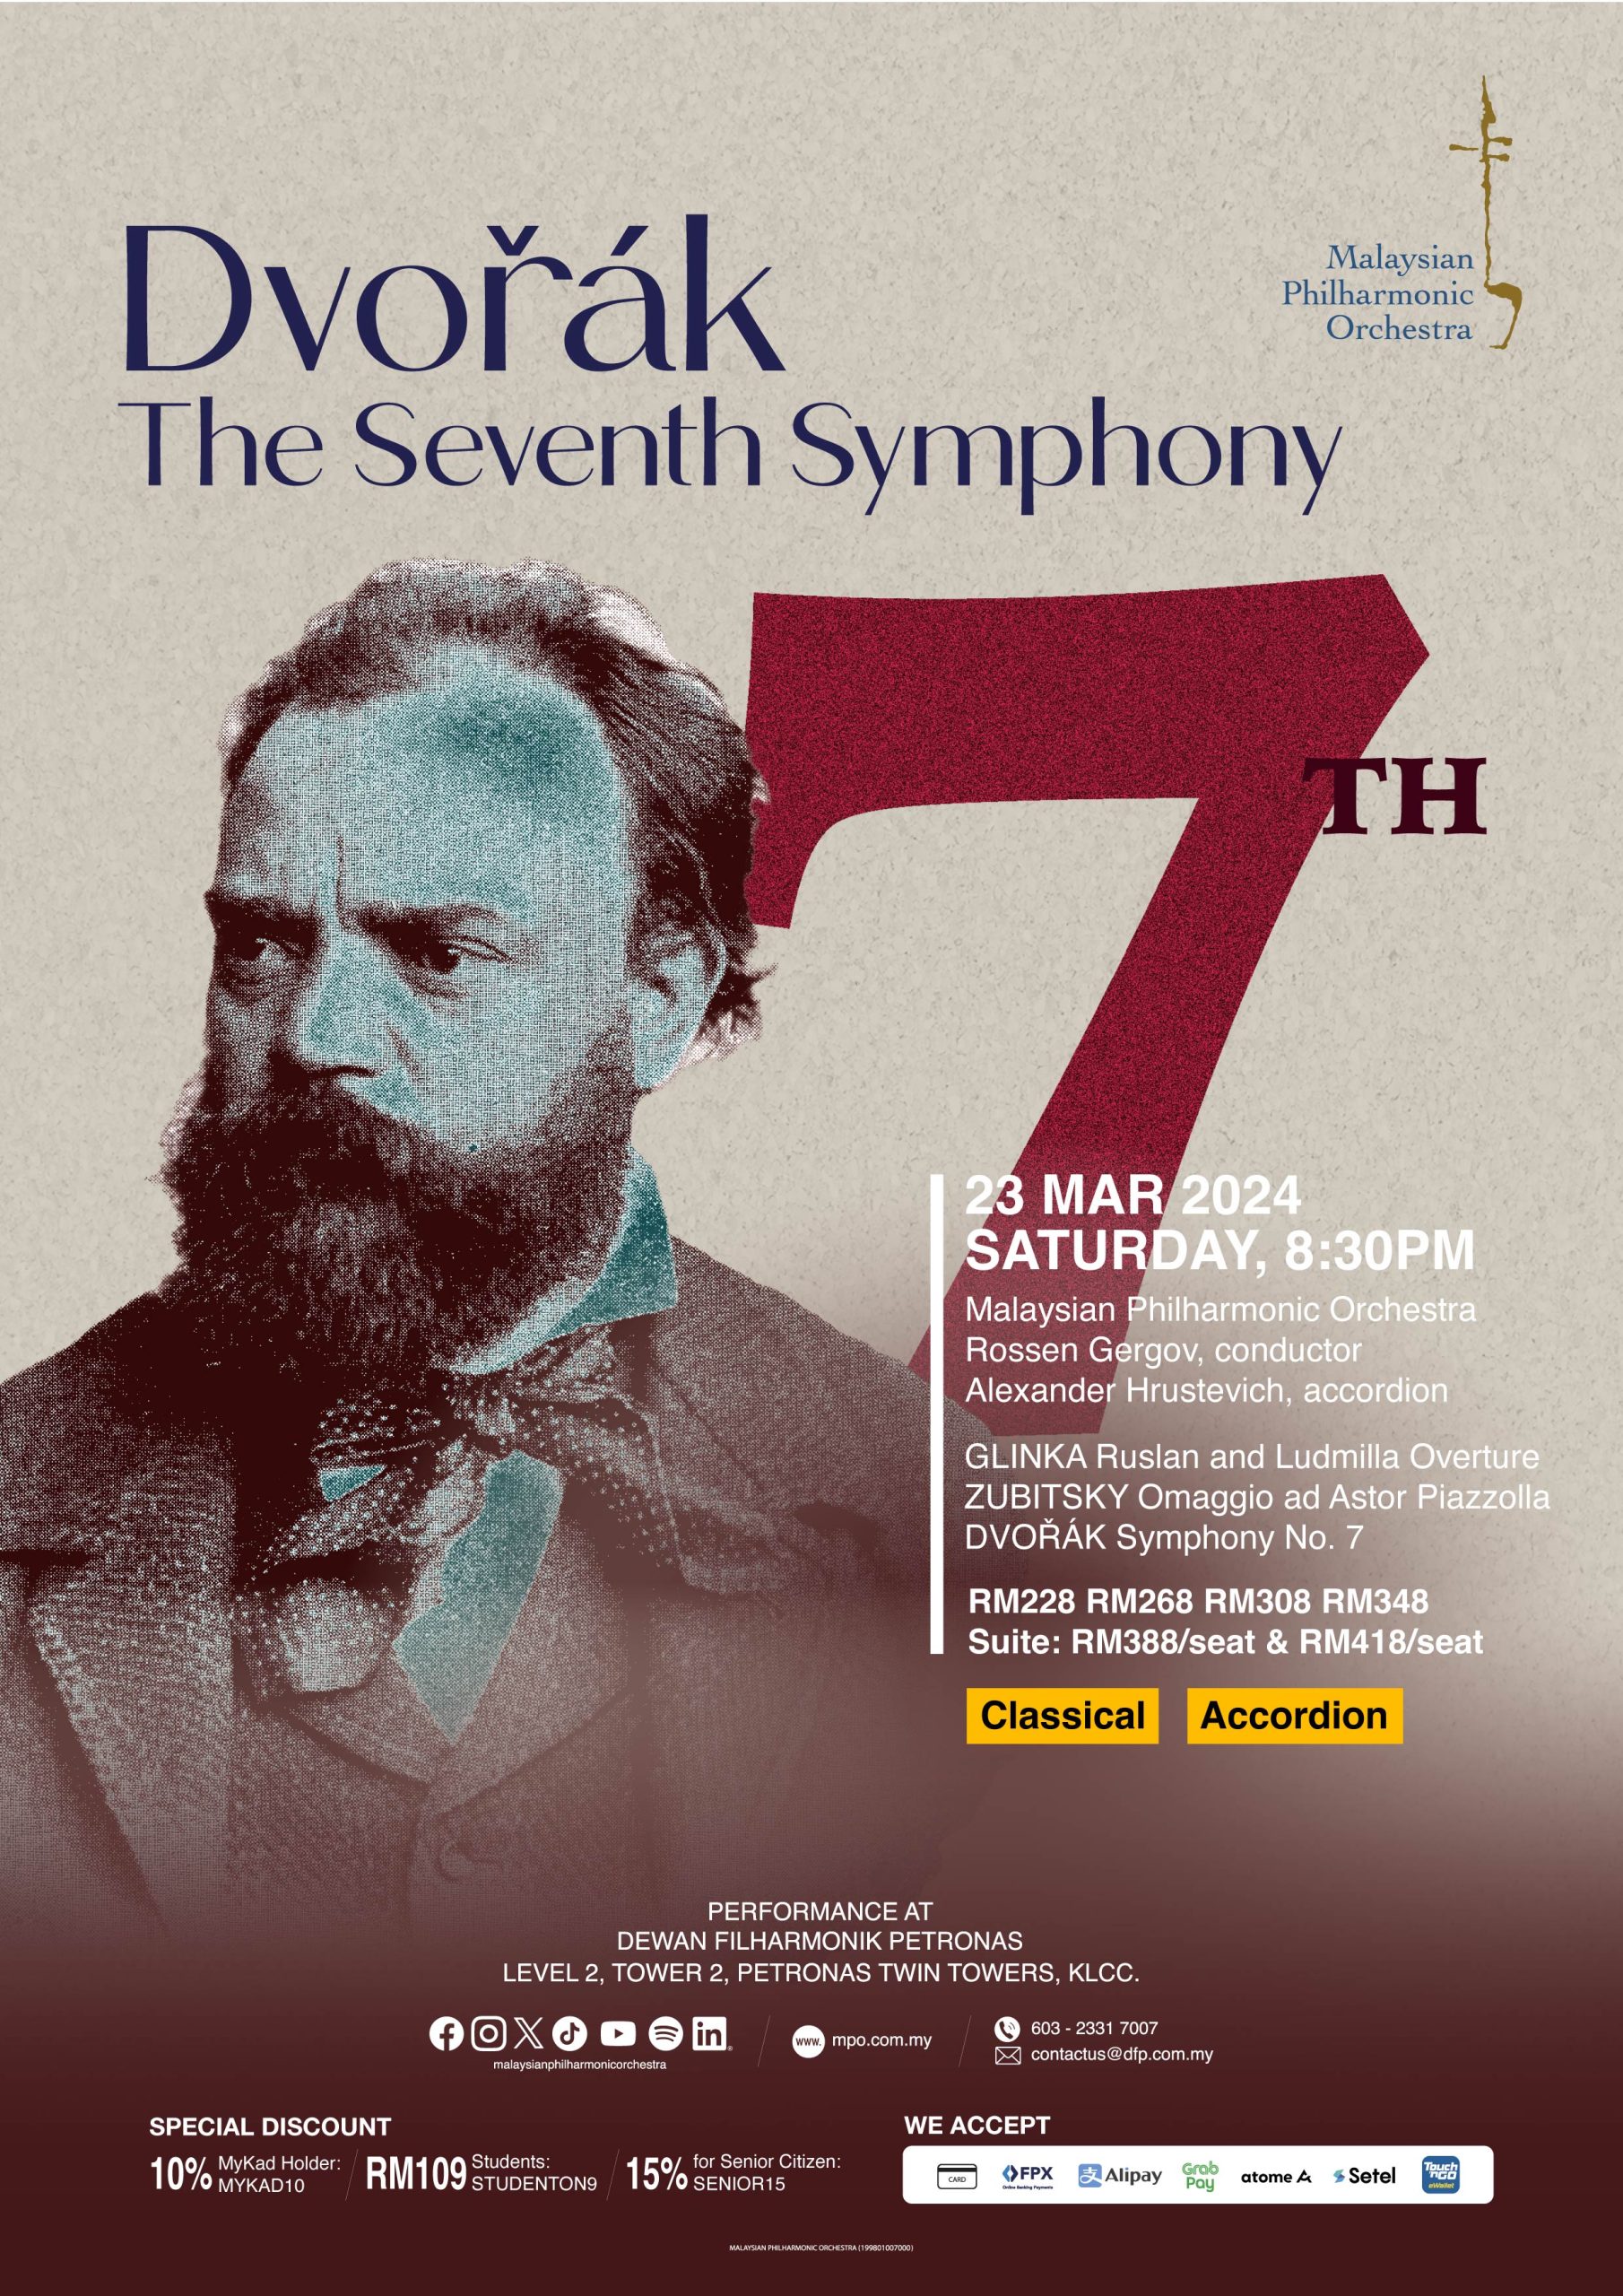 Dvořák the Seventh Symphony at Malaysian Philharmonic Orchestra